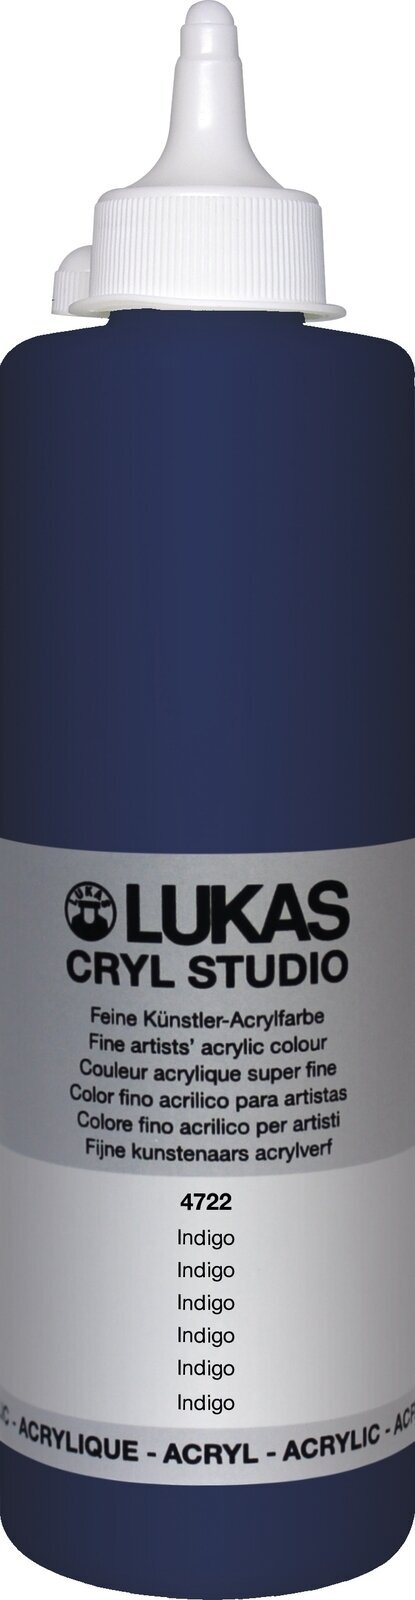 Farba akrylowa Lukas Cryl Studio Acrylic Paint Plastic Bottle Farba akrylowa Indigo 500 ml 1 szt